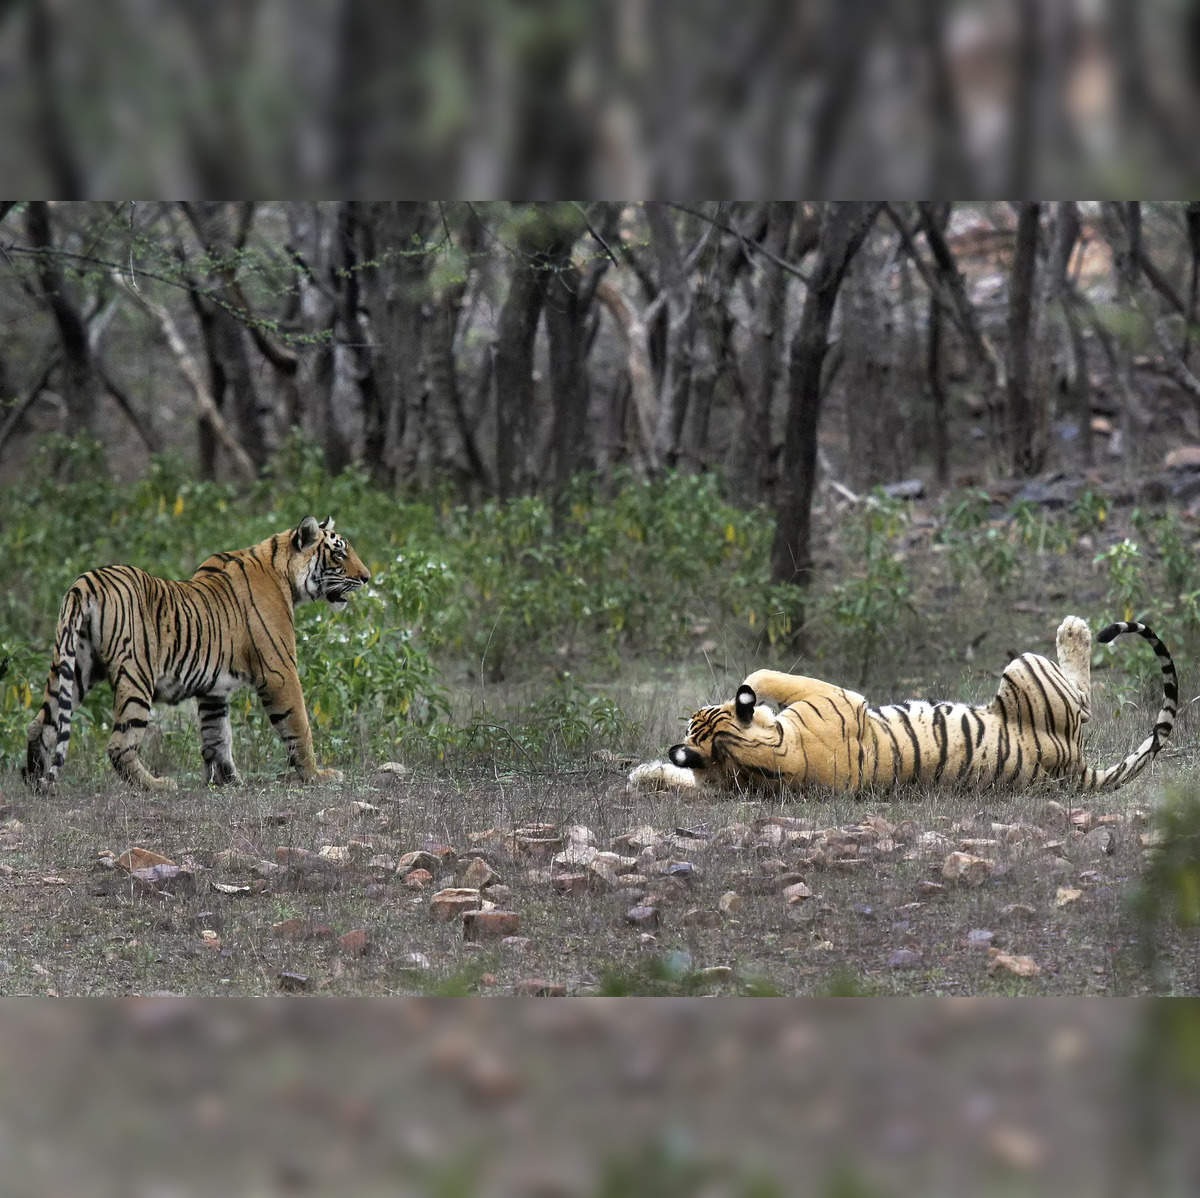 Close Up Portraits of roaring Bengal Tiger. Digital artwork Stock